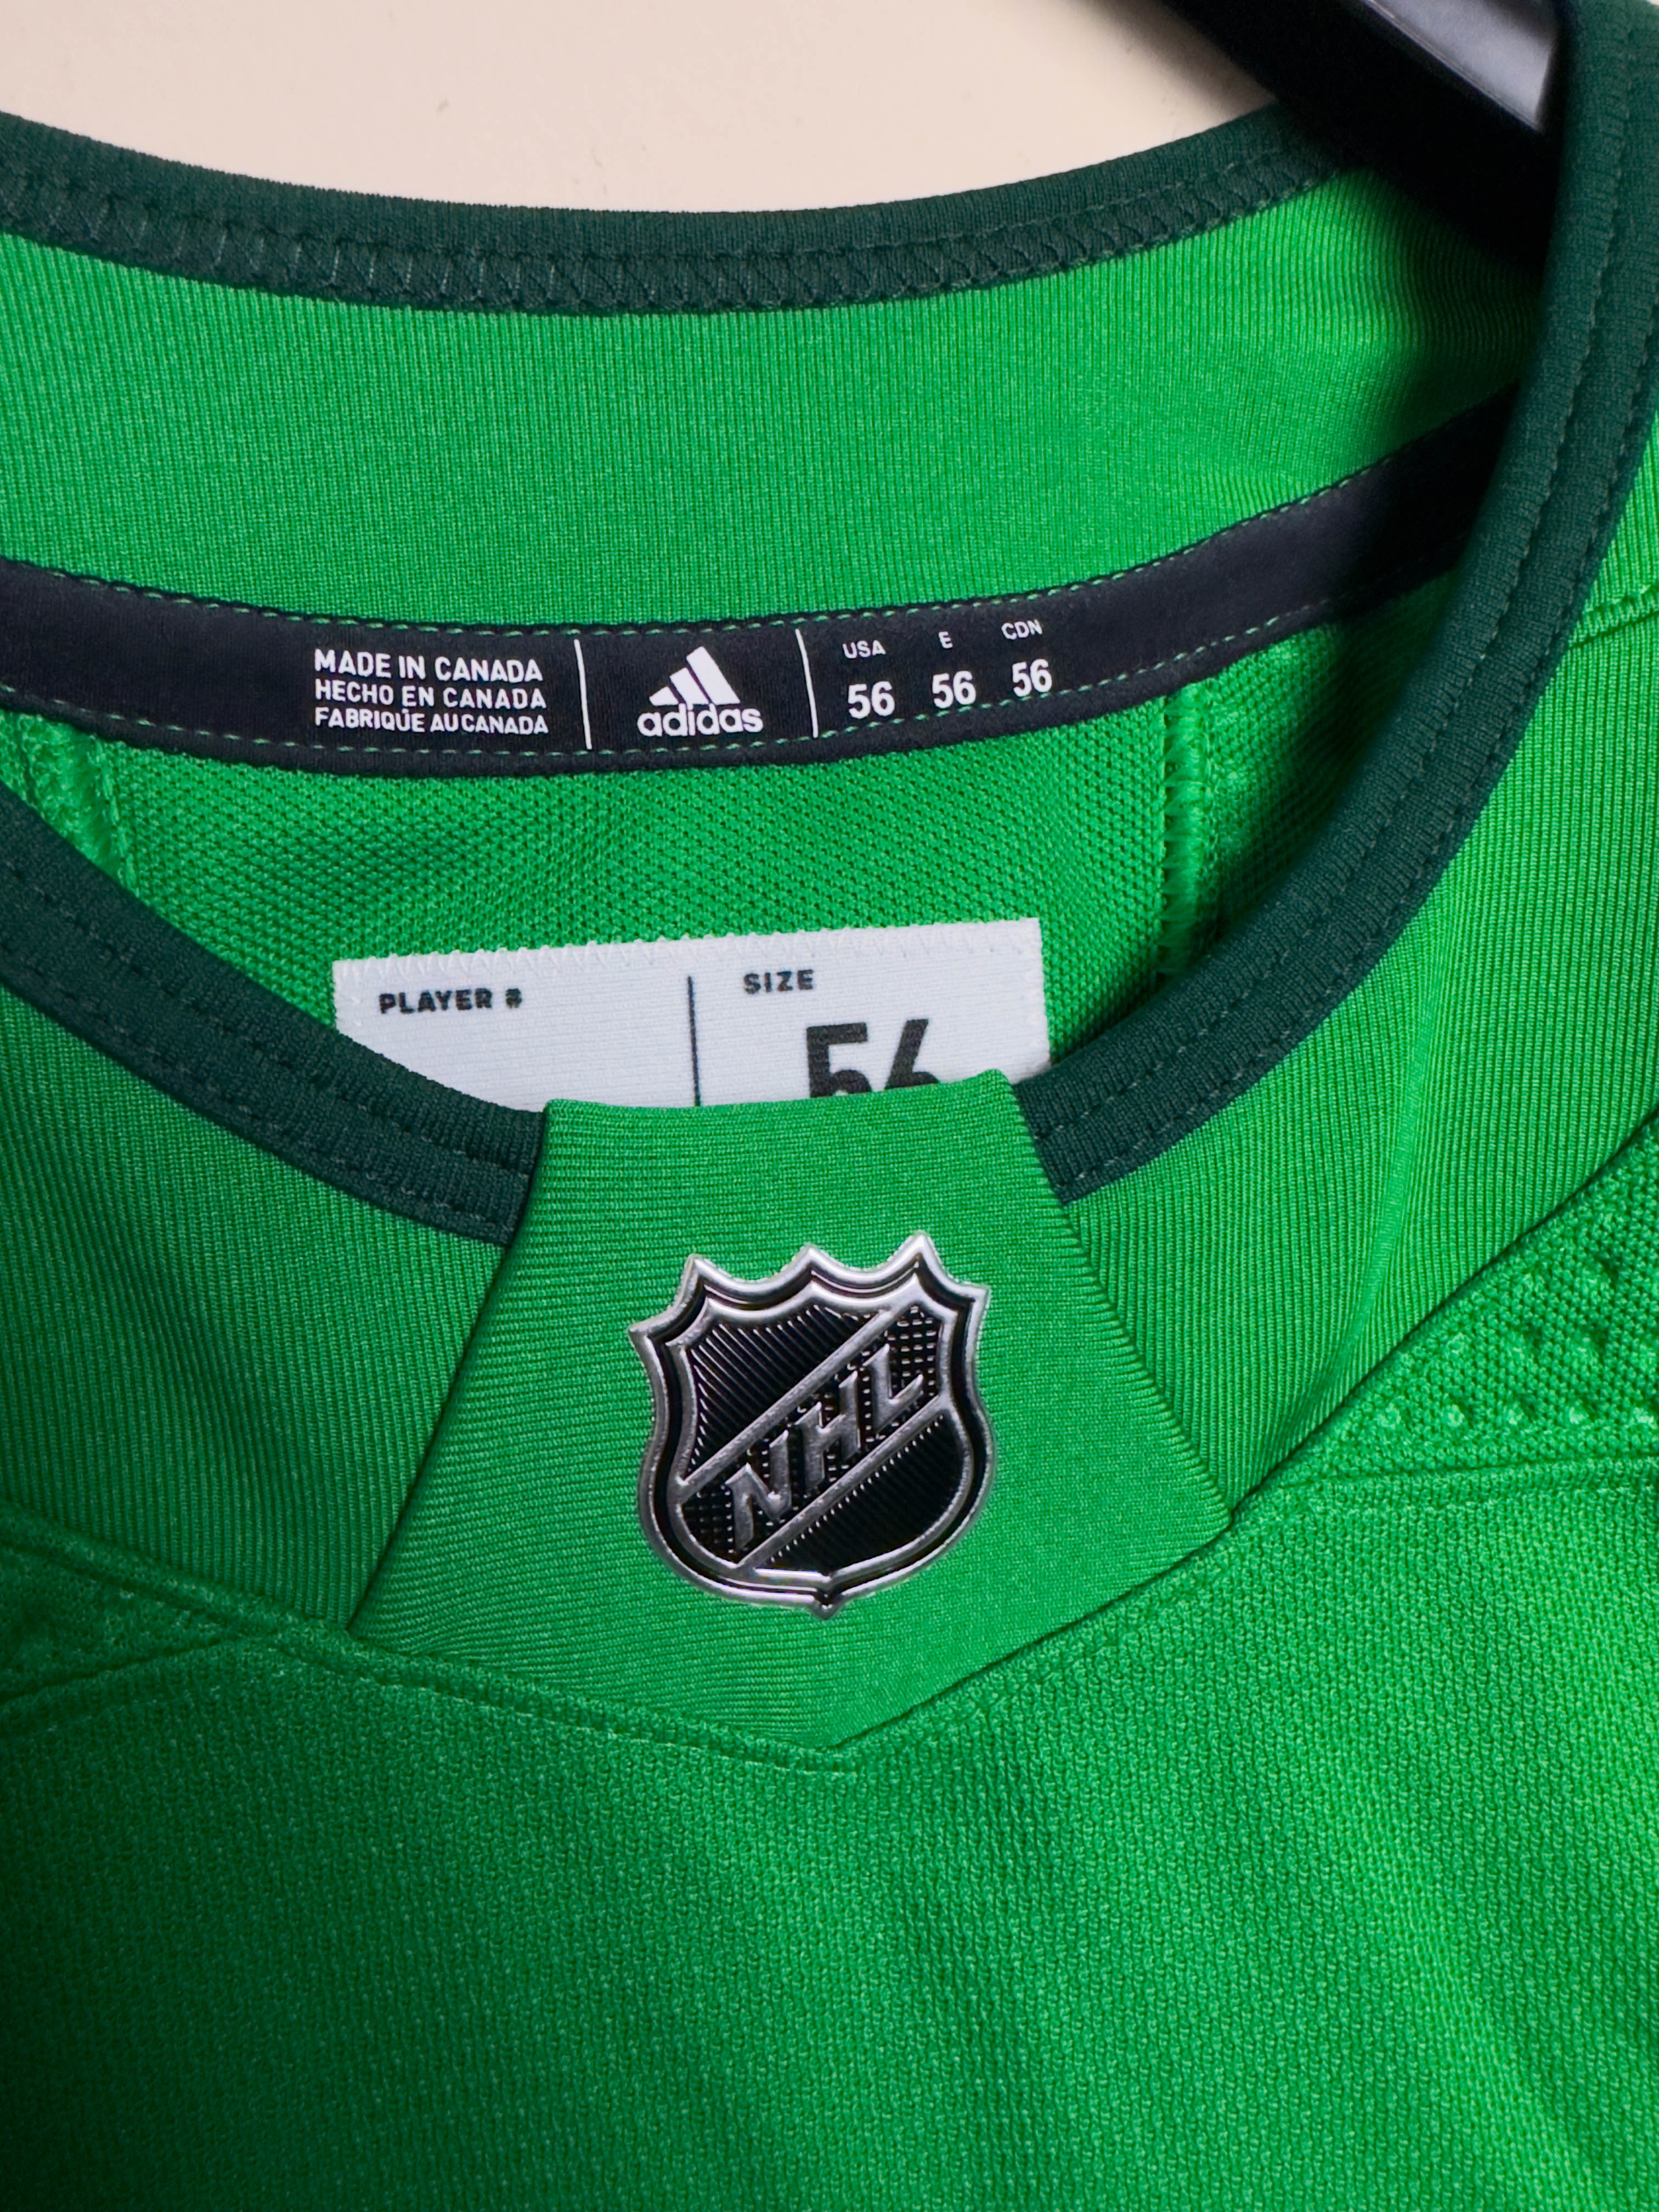 New NHL Adidas Green Men's Jersey Minnesota Wild St. Patrick Day Size 54